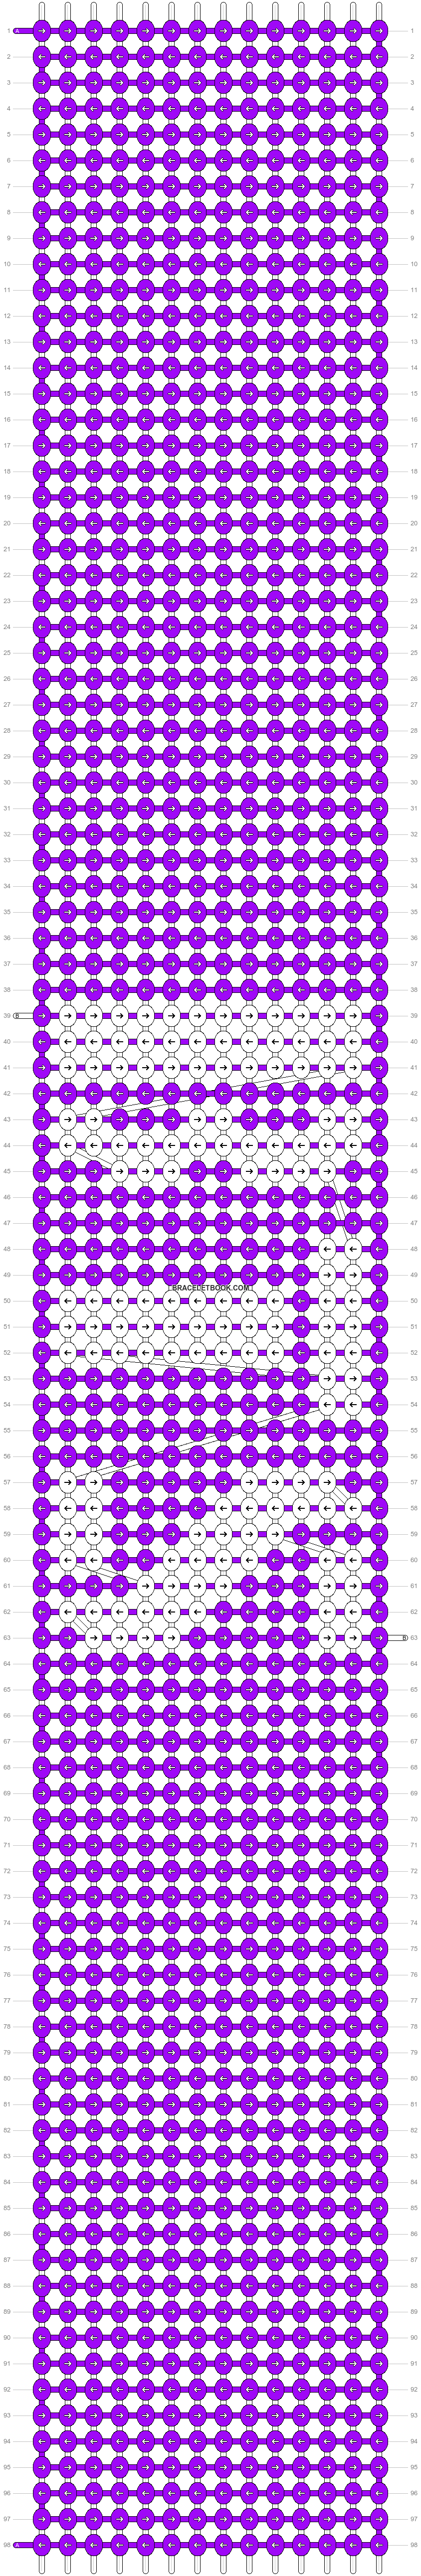 Alpha pattern #21589 variation #12011 pattern